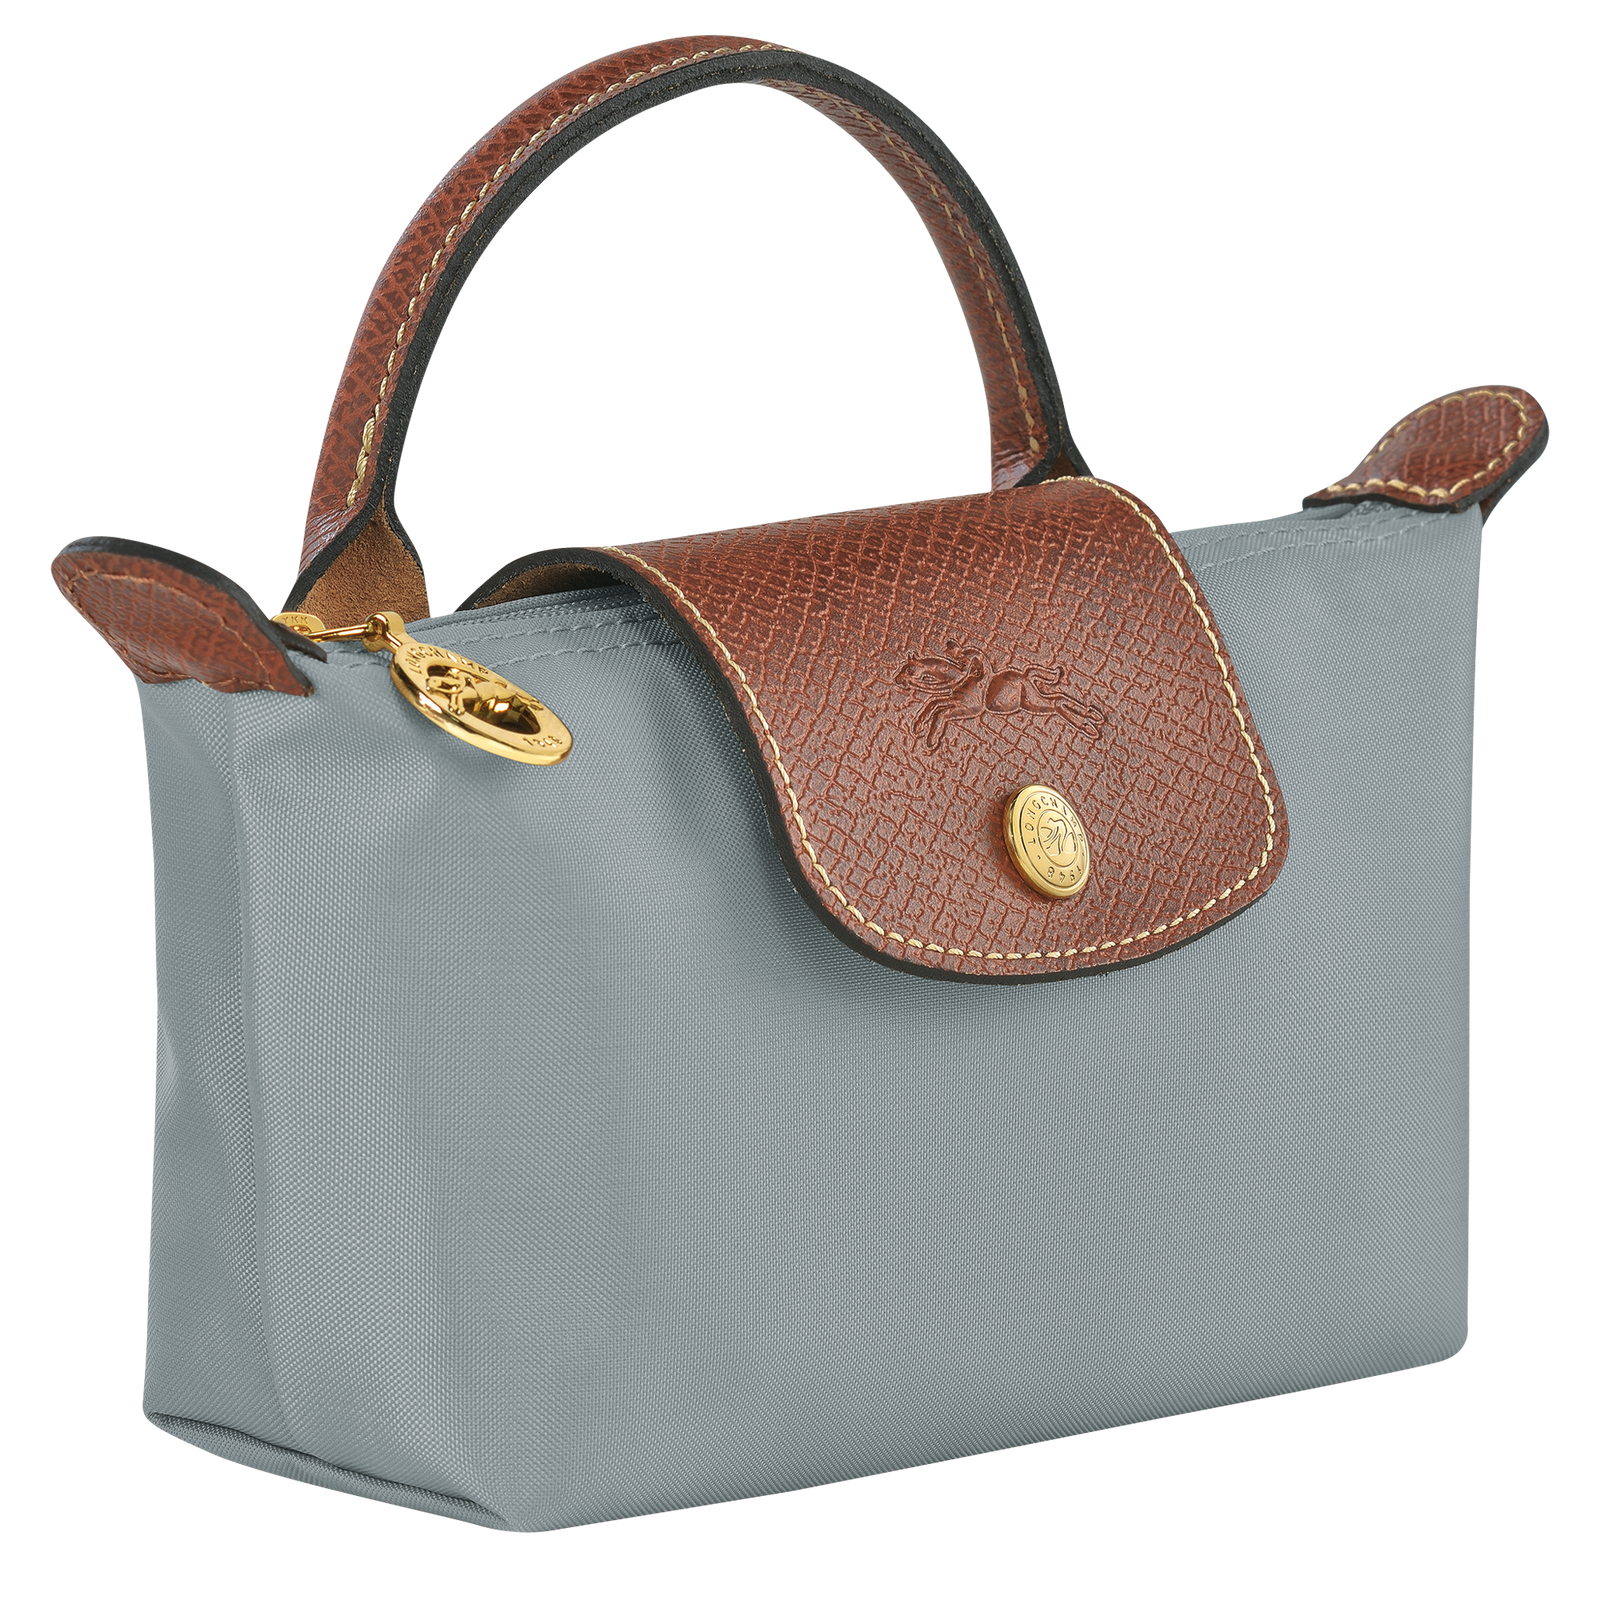 Le Pliage 原創系列 附提把的小袋子, 鋼灰色